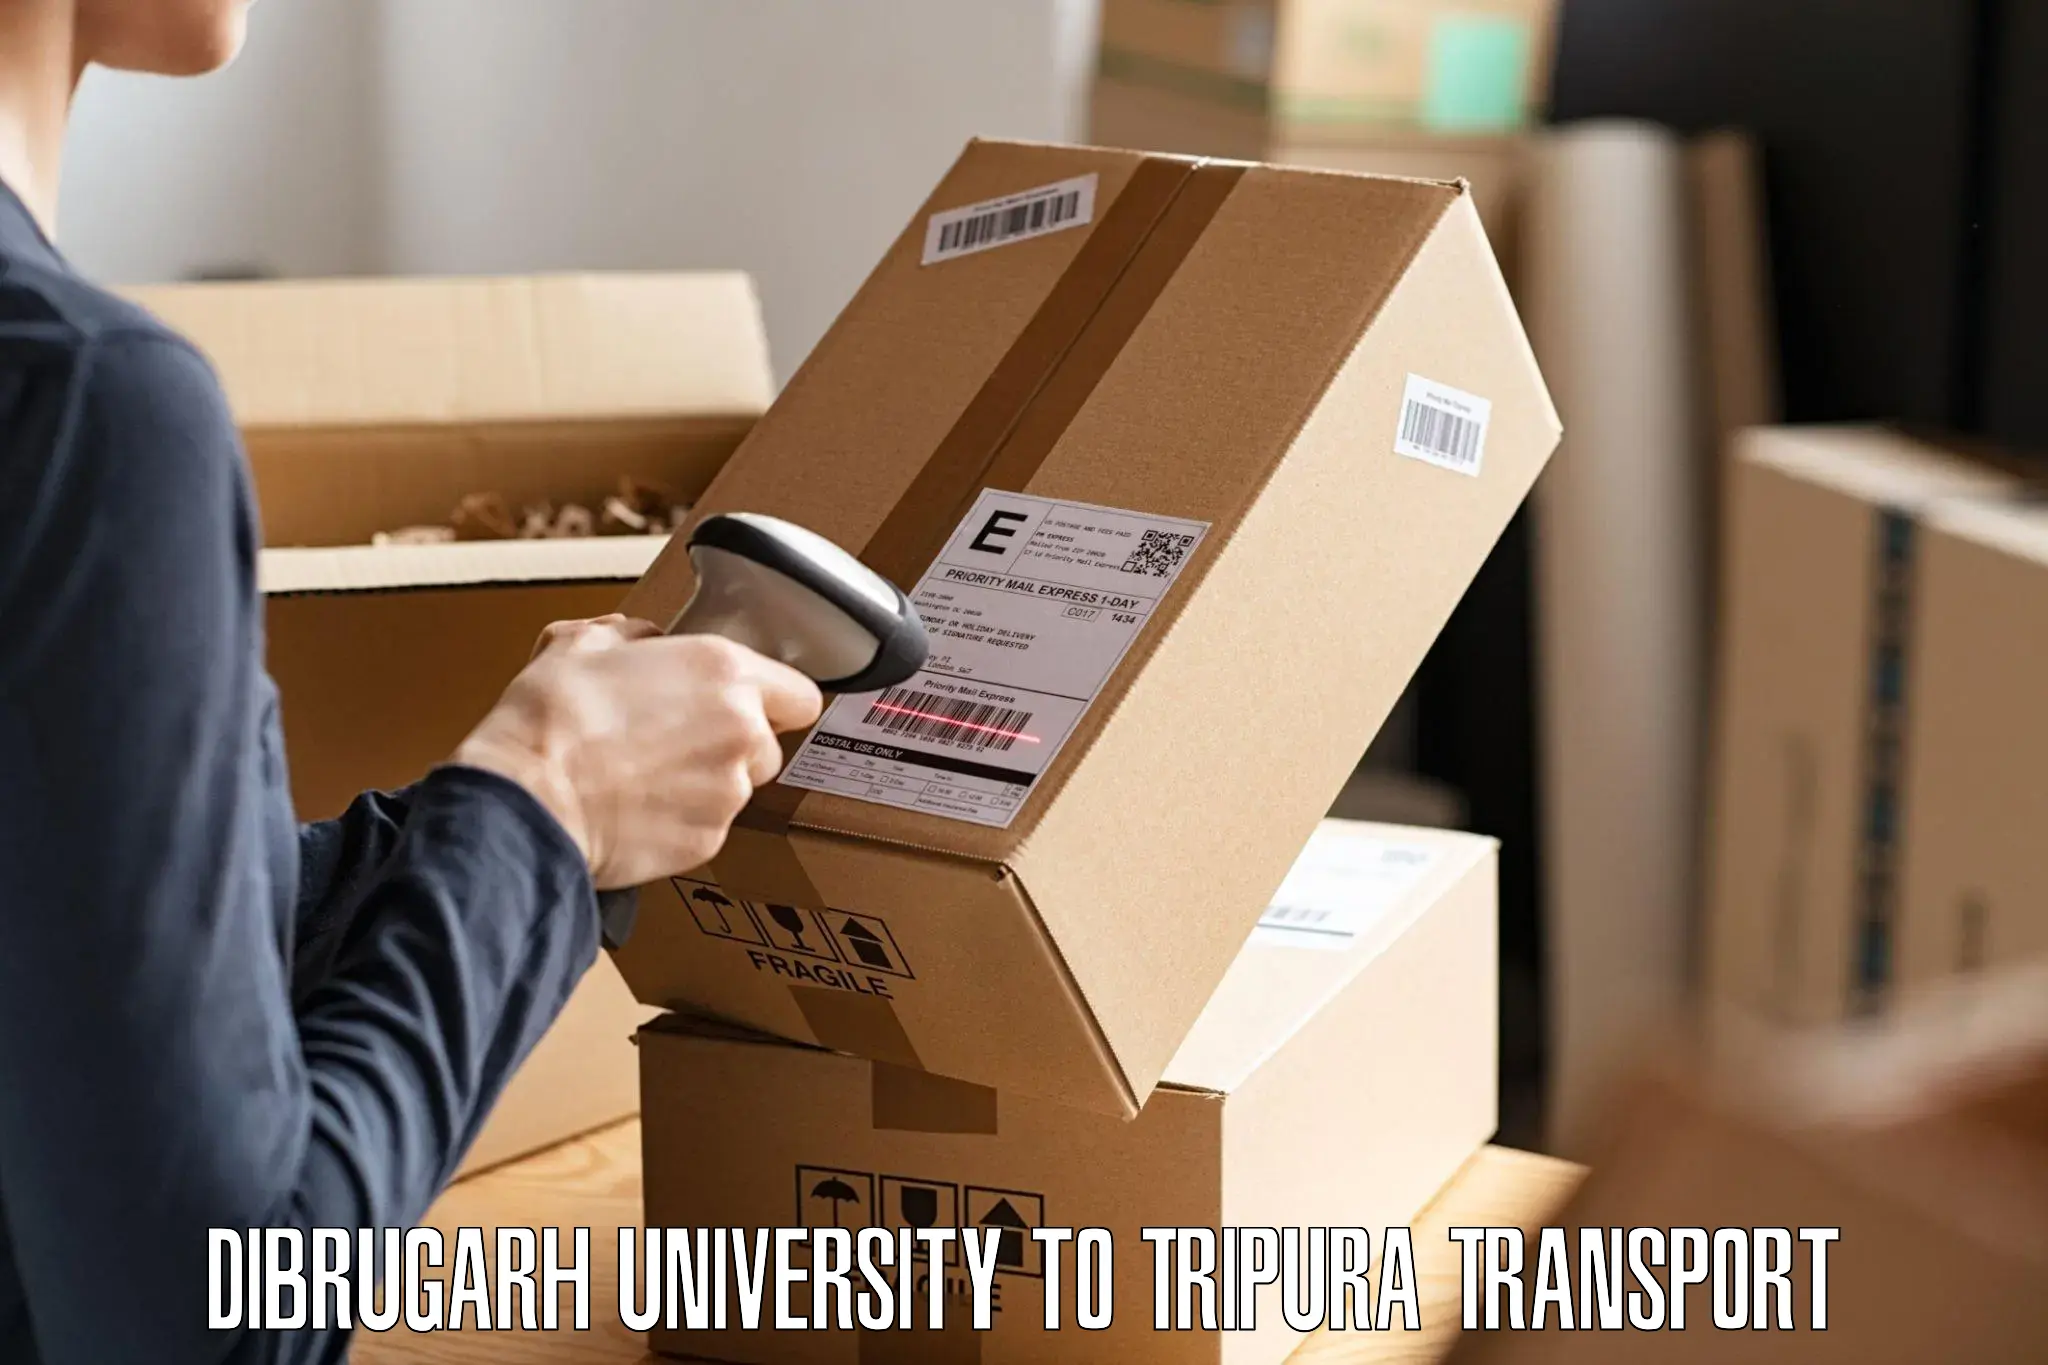 Air freight transport services Dibrugarh University to Agartala